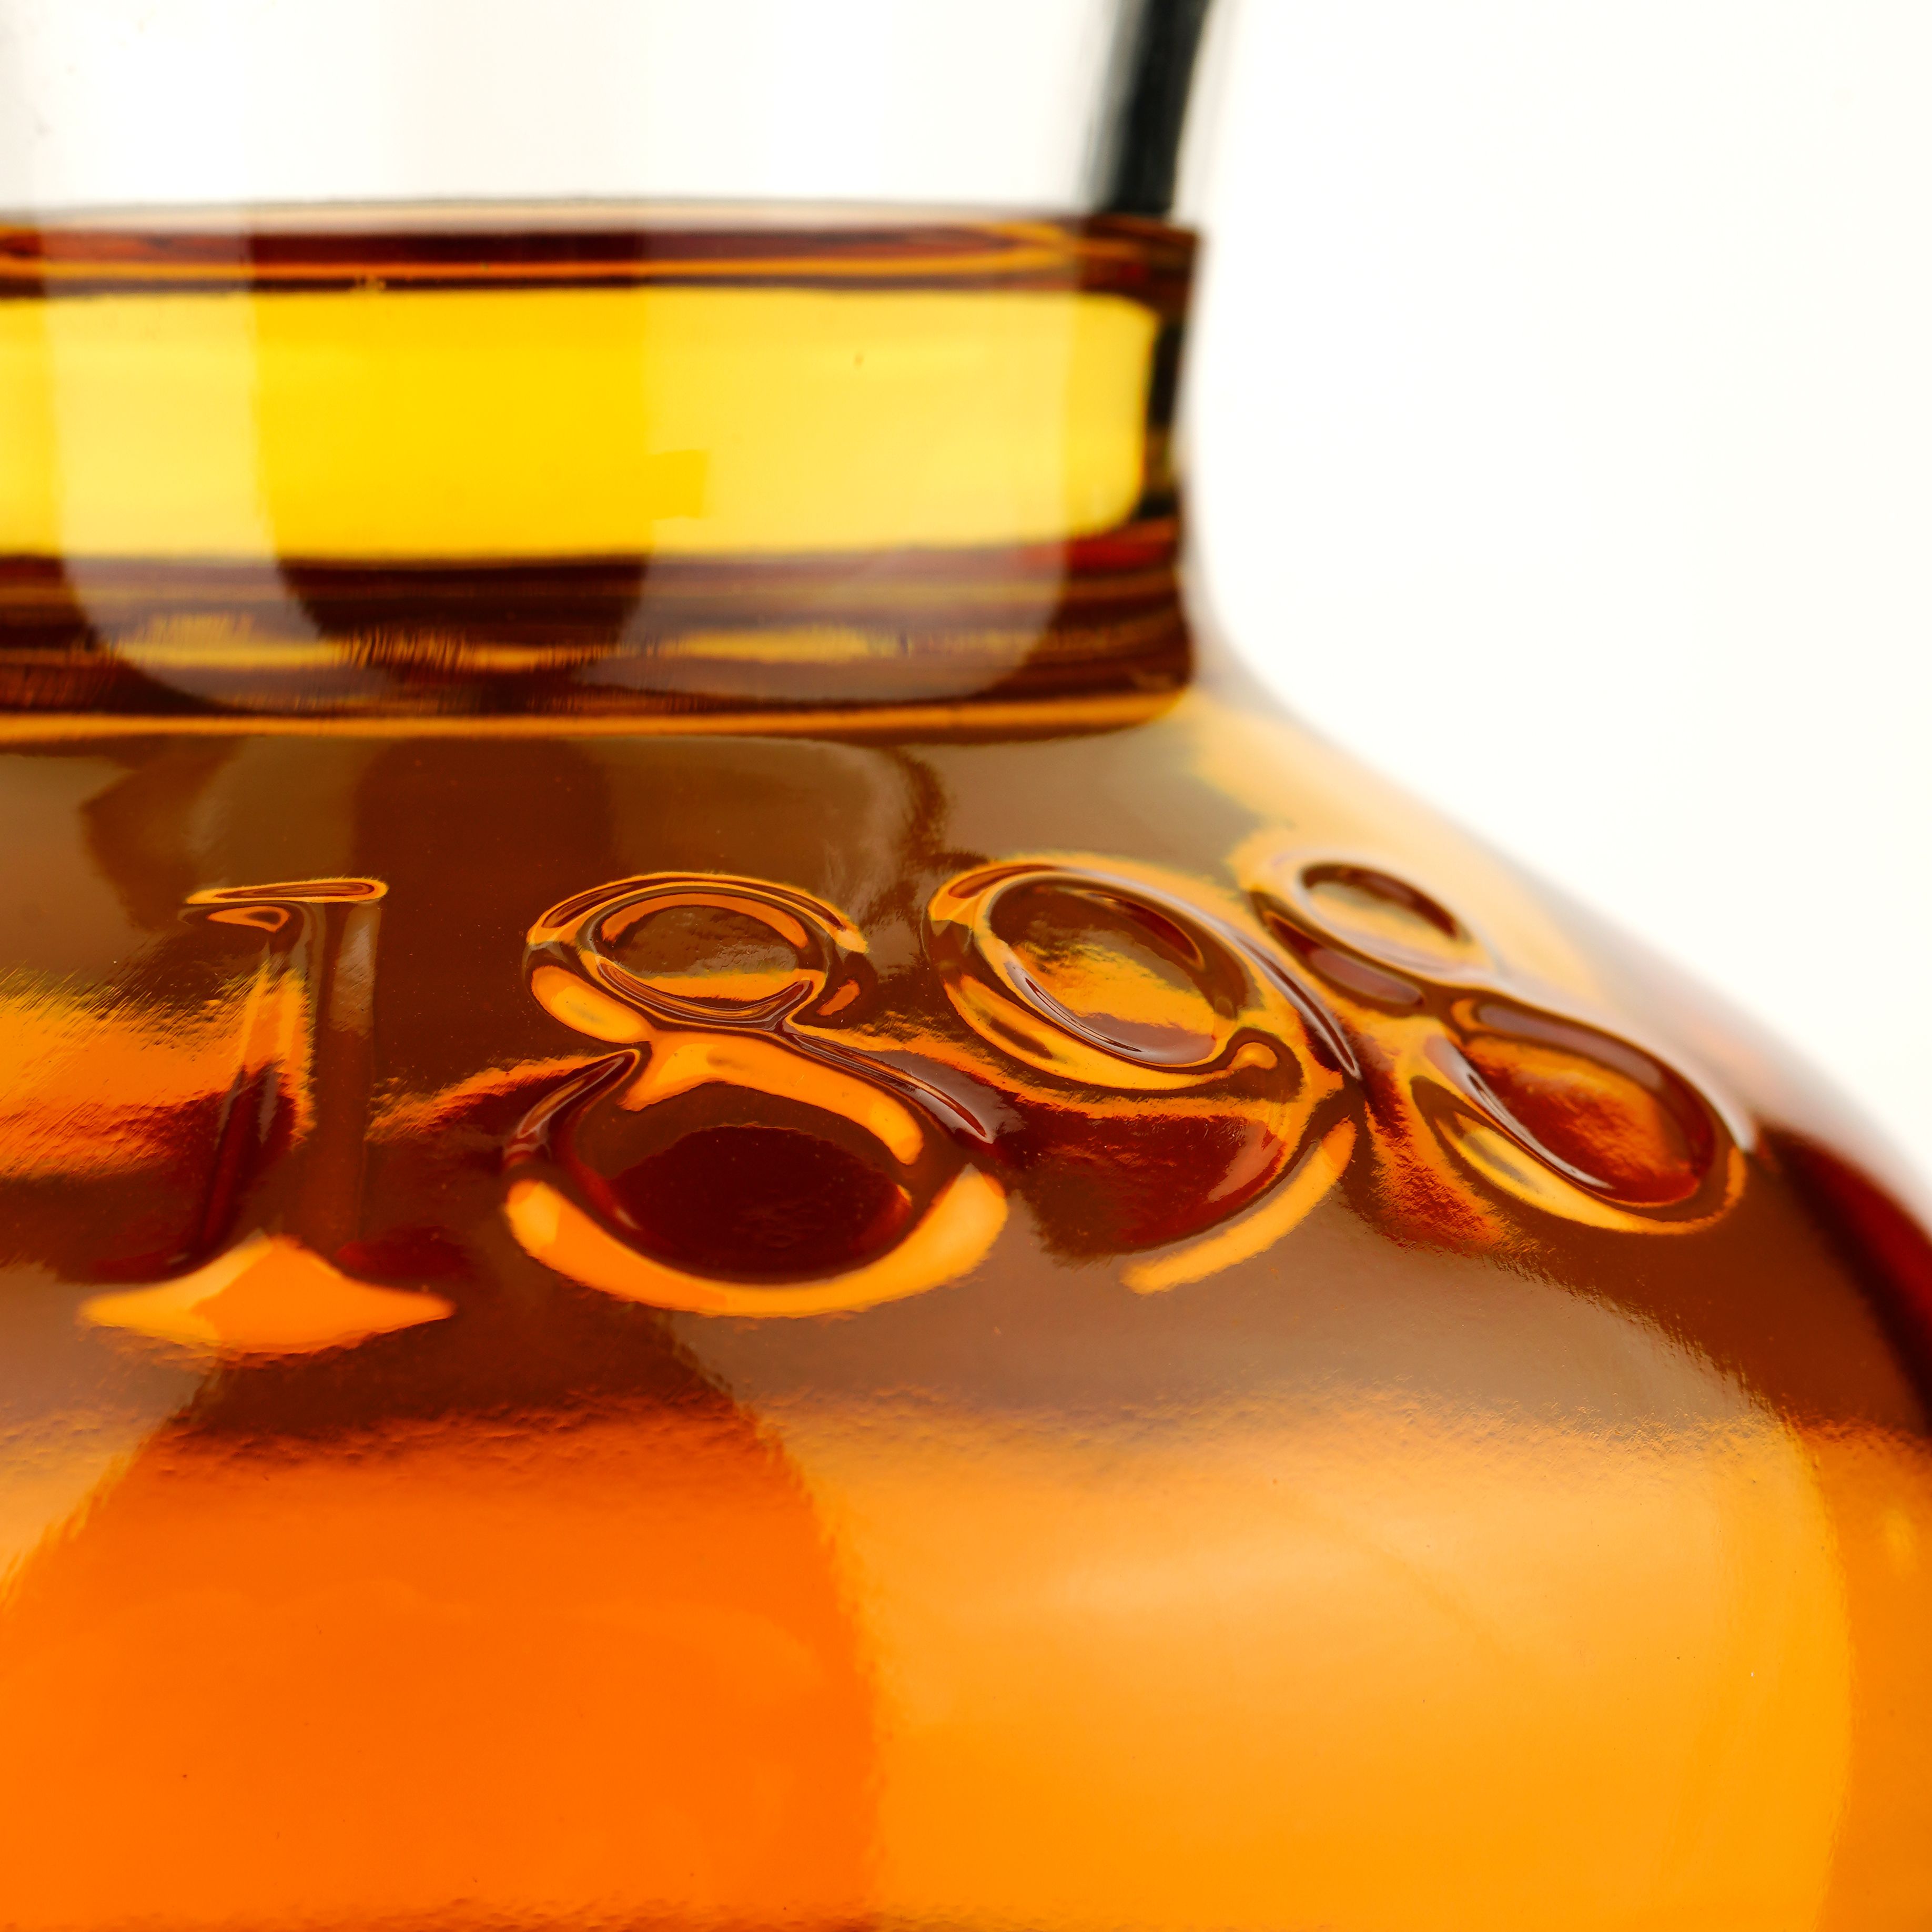 Виски BenRiach 16 Years Old Virgin Oak Hogshead Cask 3269 Single Malt Scotch Whisky, в подарочной упаковке, 49,3%, 0,7 л - фото 6